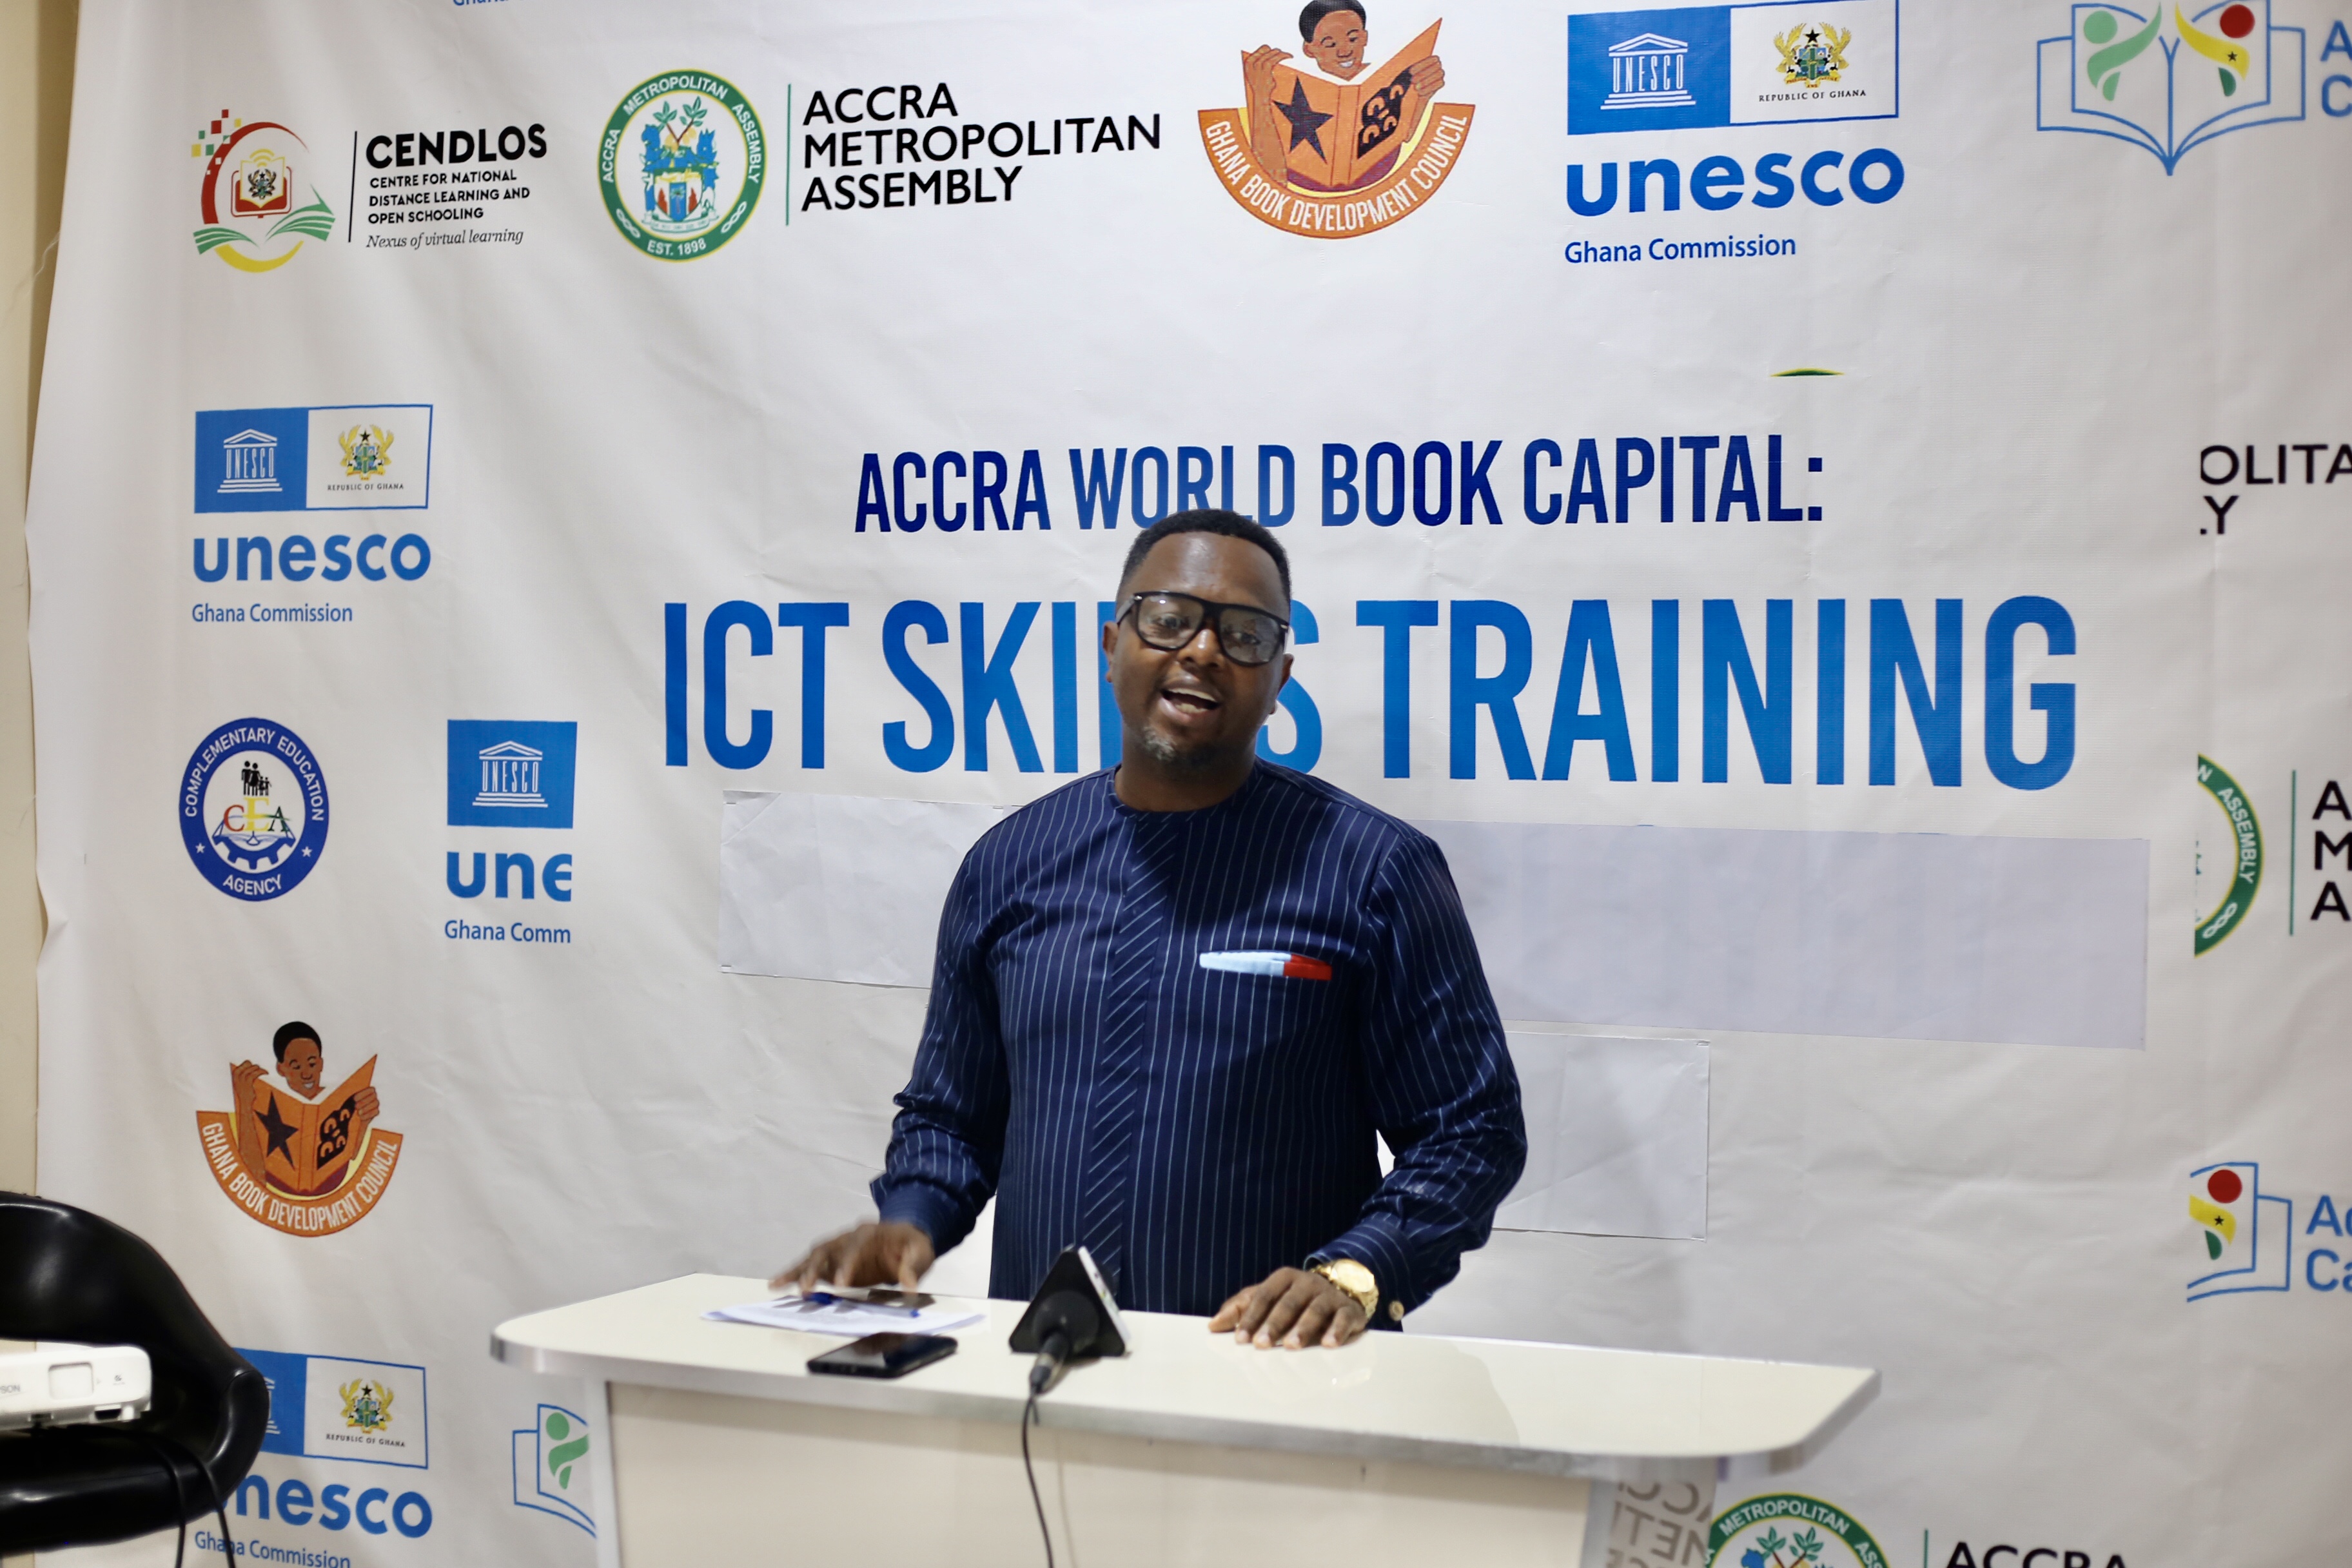 AWBC, 23 organised an ICT Training Programme